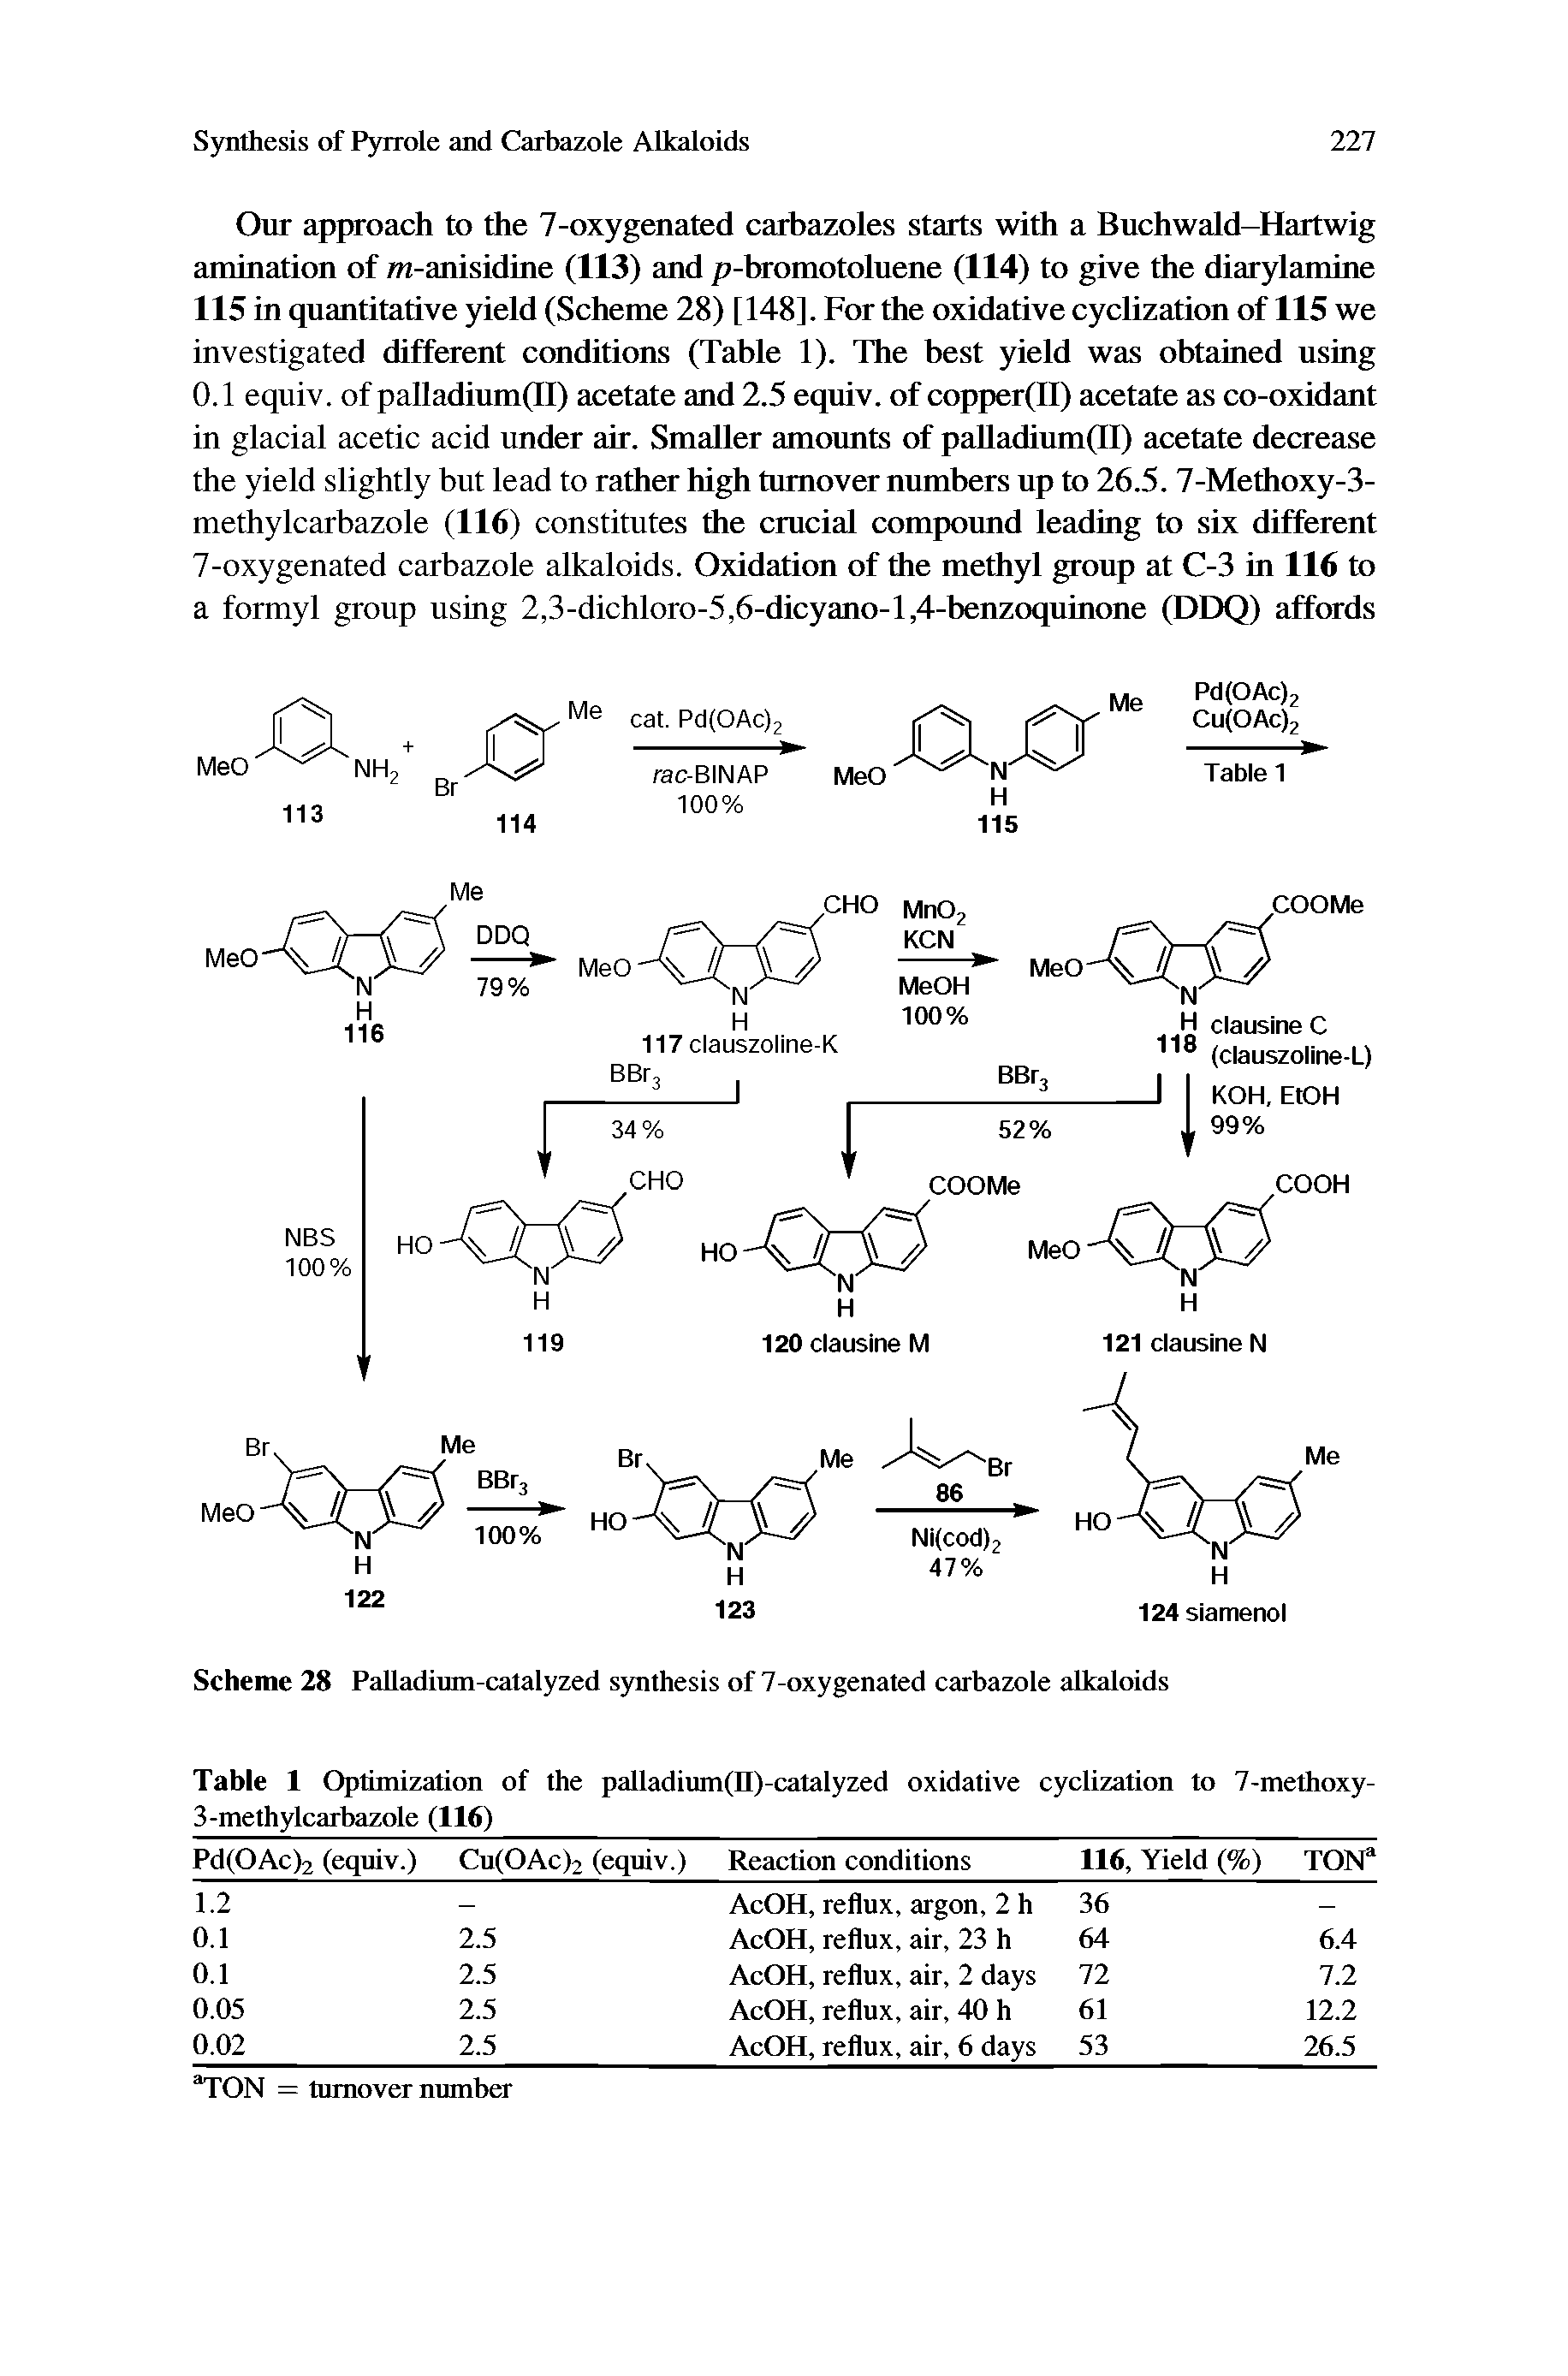 Scheme 28 Palladium-catalyzed synthesis of 7-oxygenated carbazole alkaloids...